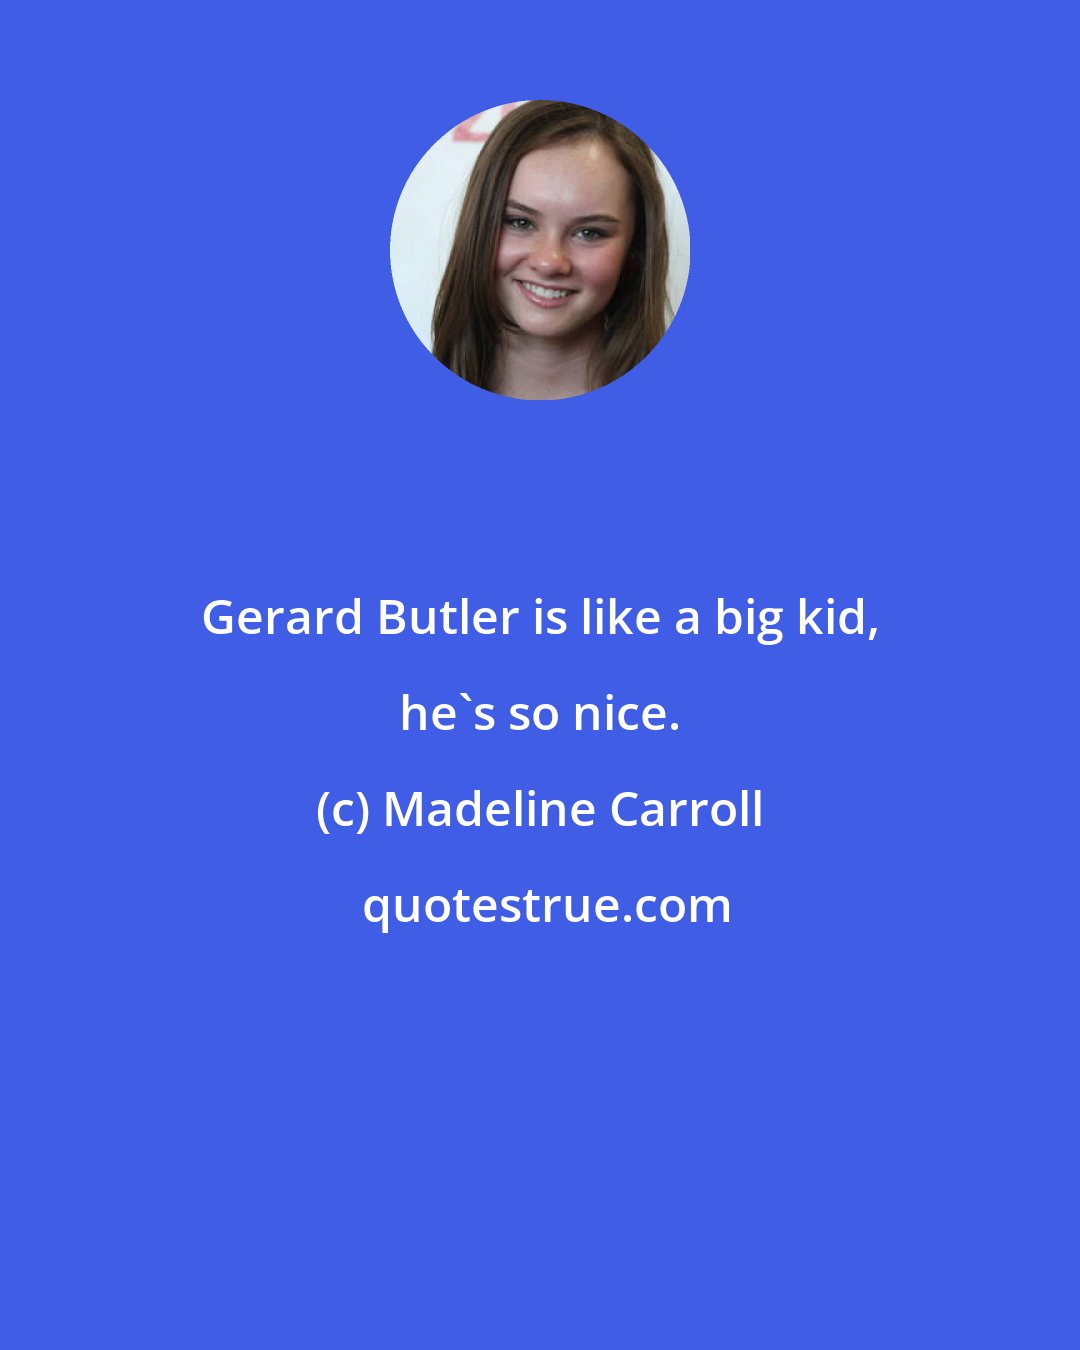 Madeline Carroll: Gerard Butler is like a big kid, he's so nice.